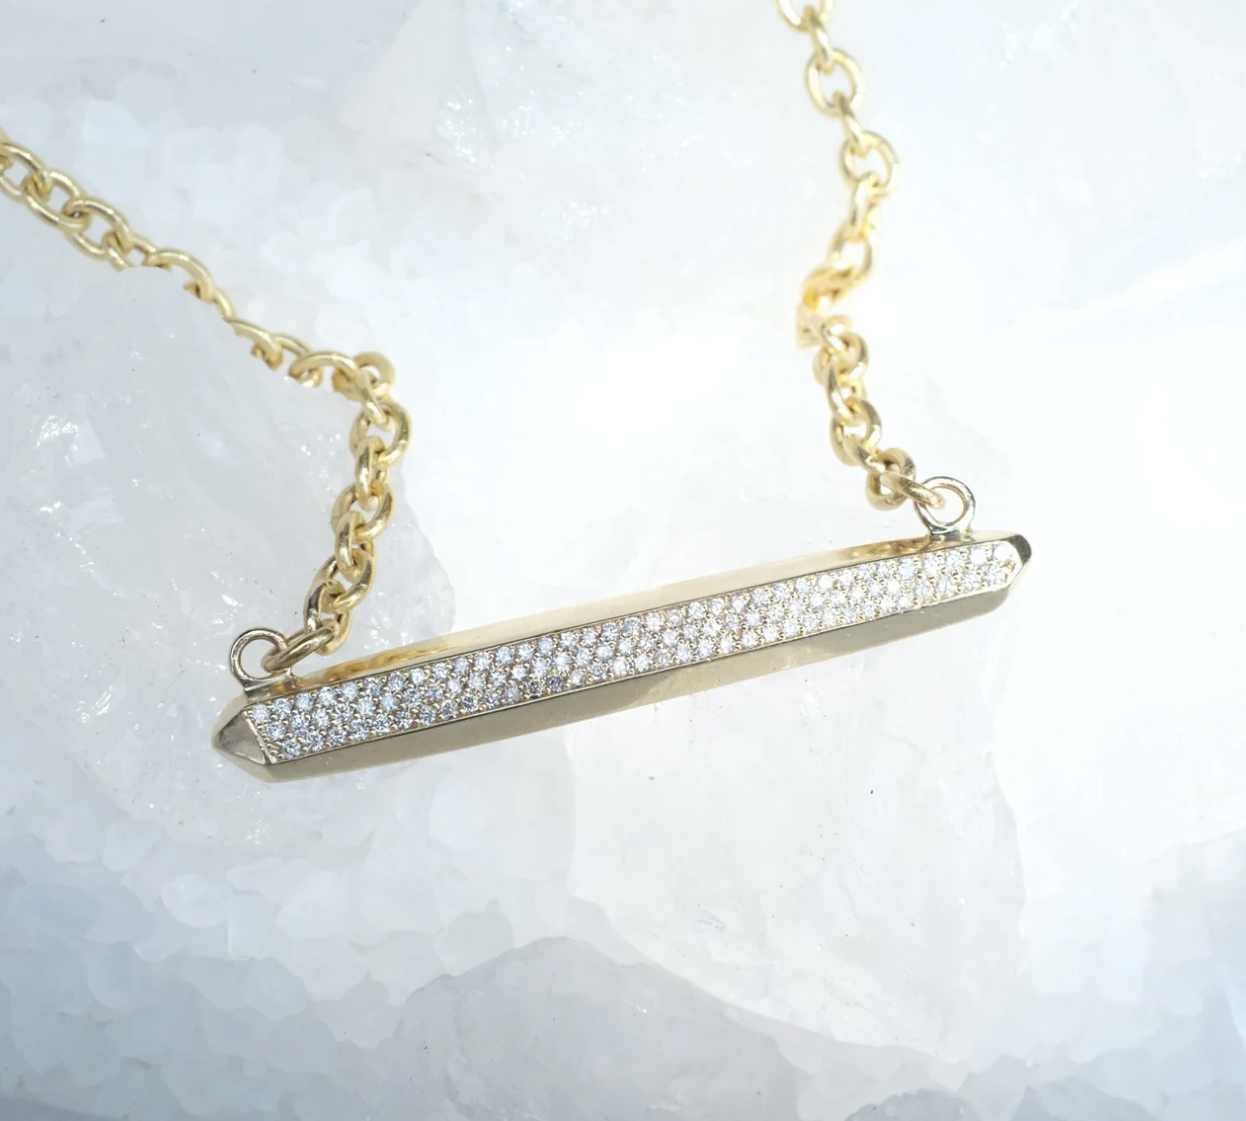 Crystalline Necklace Pendant Elisabeth Bell Jewelry   